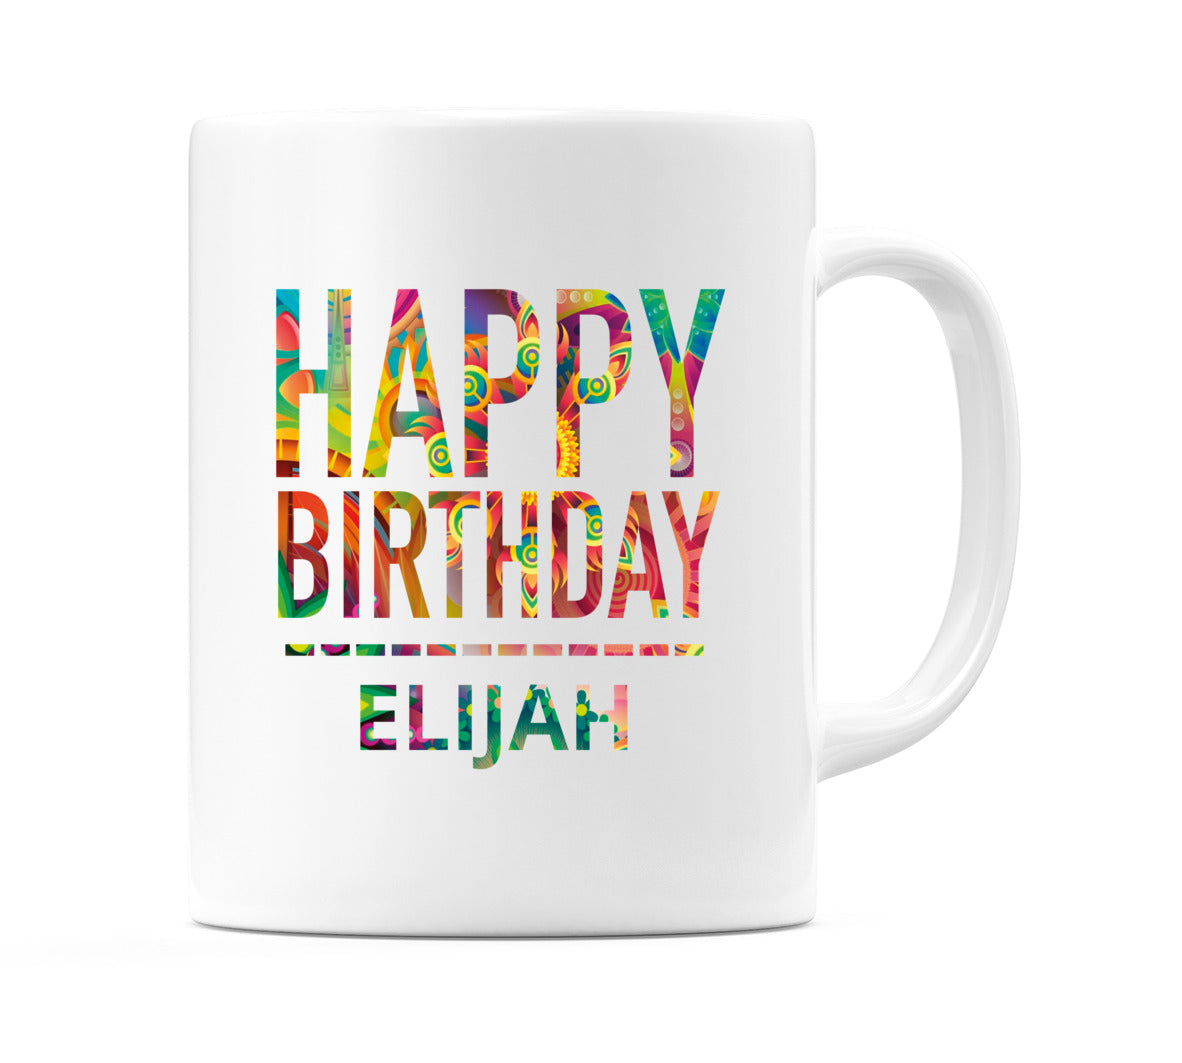 Happy Birthday Elijah (Tie Dye Effect) Mug Cup by WeDoMugs